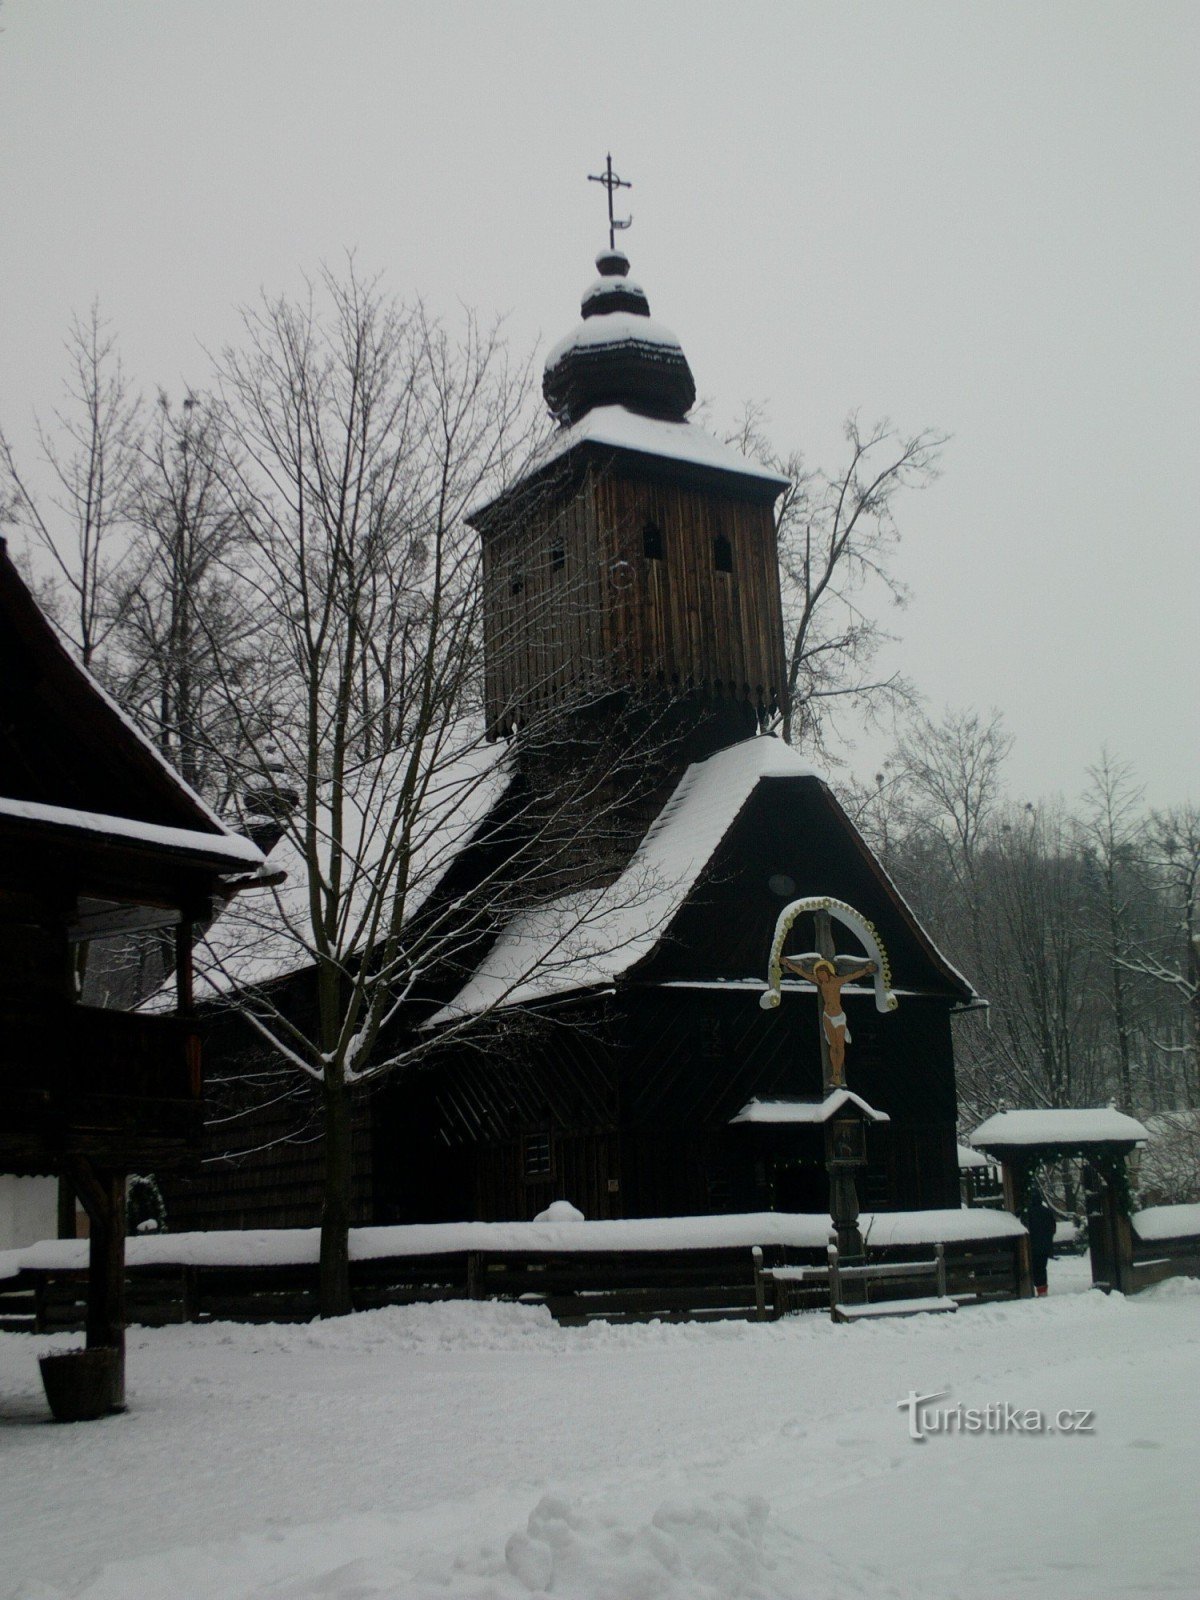 Winter10 - Wooden town